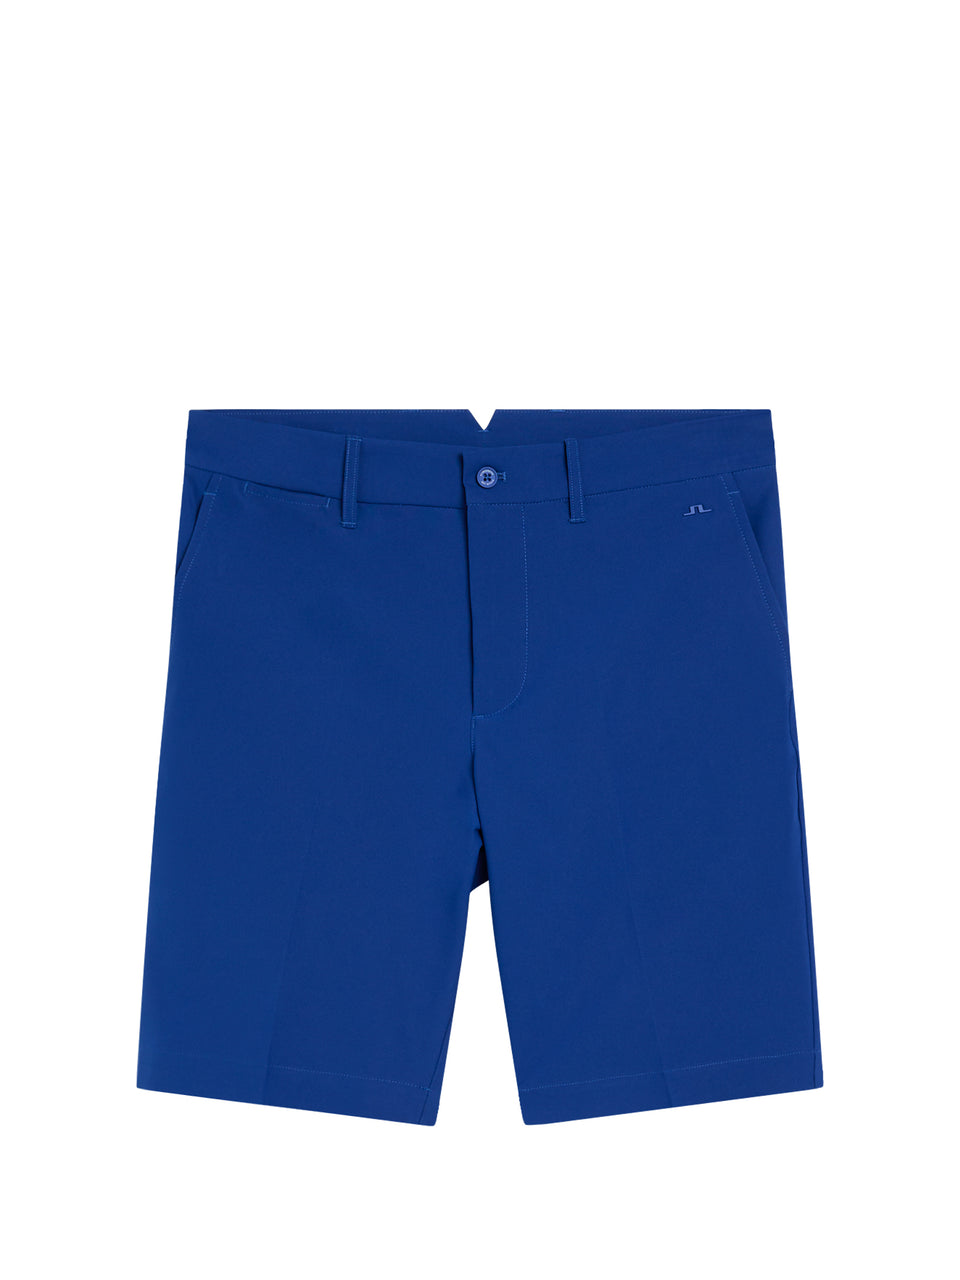 Eloy Shorts / Sodalite Blue